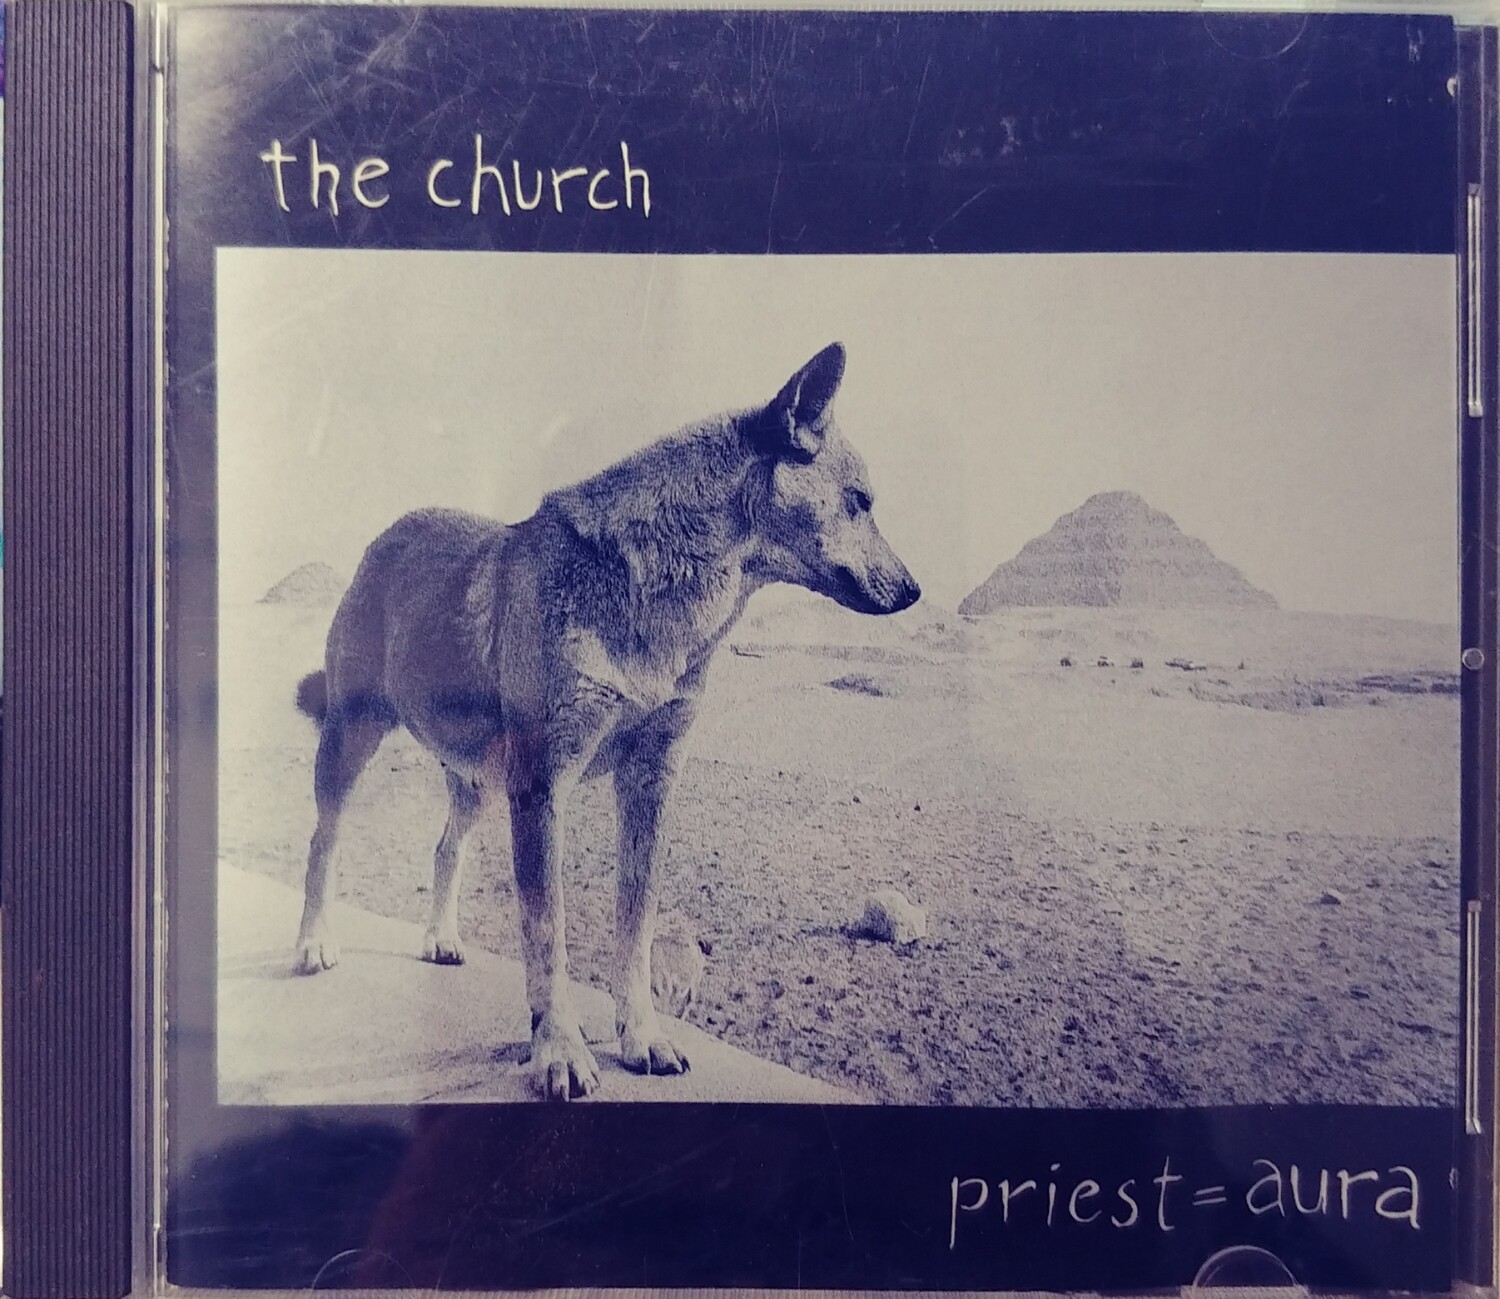 The Church - Priest = Aura (CD)